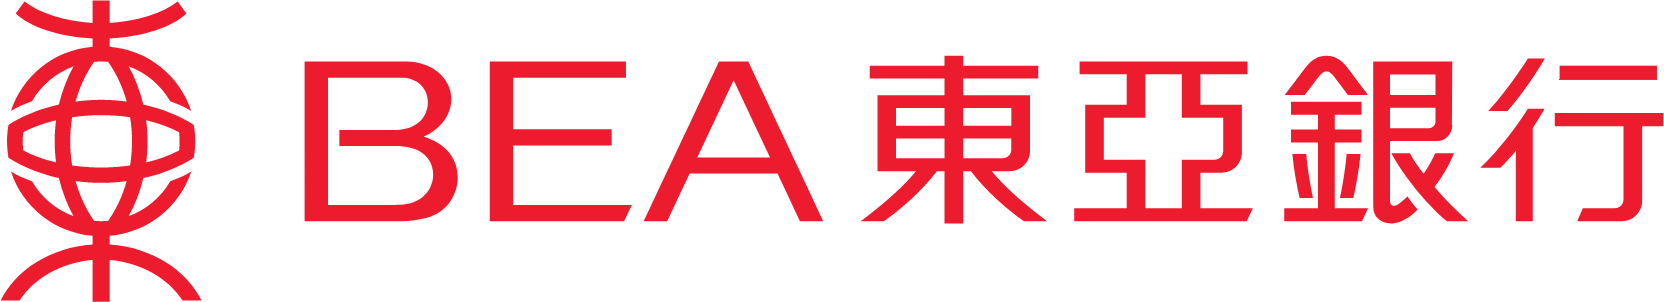 Bank of East Asia
 logo large (transparent PNG)